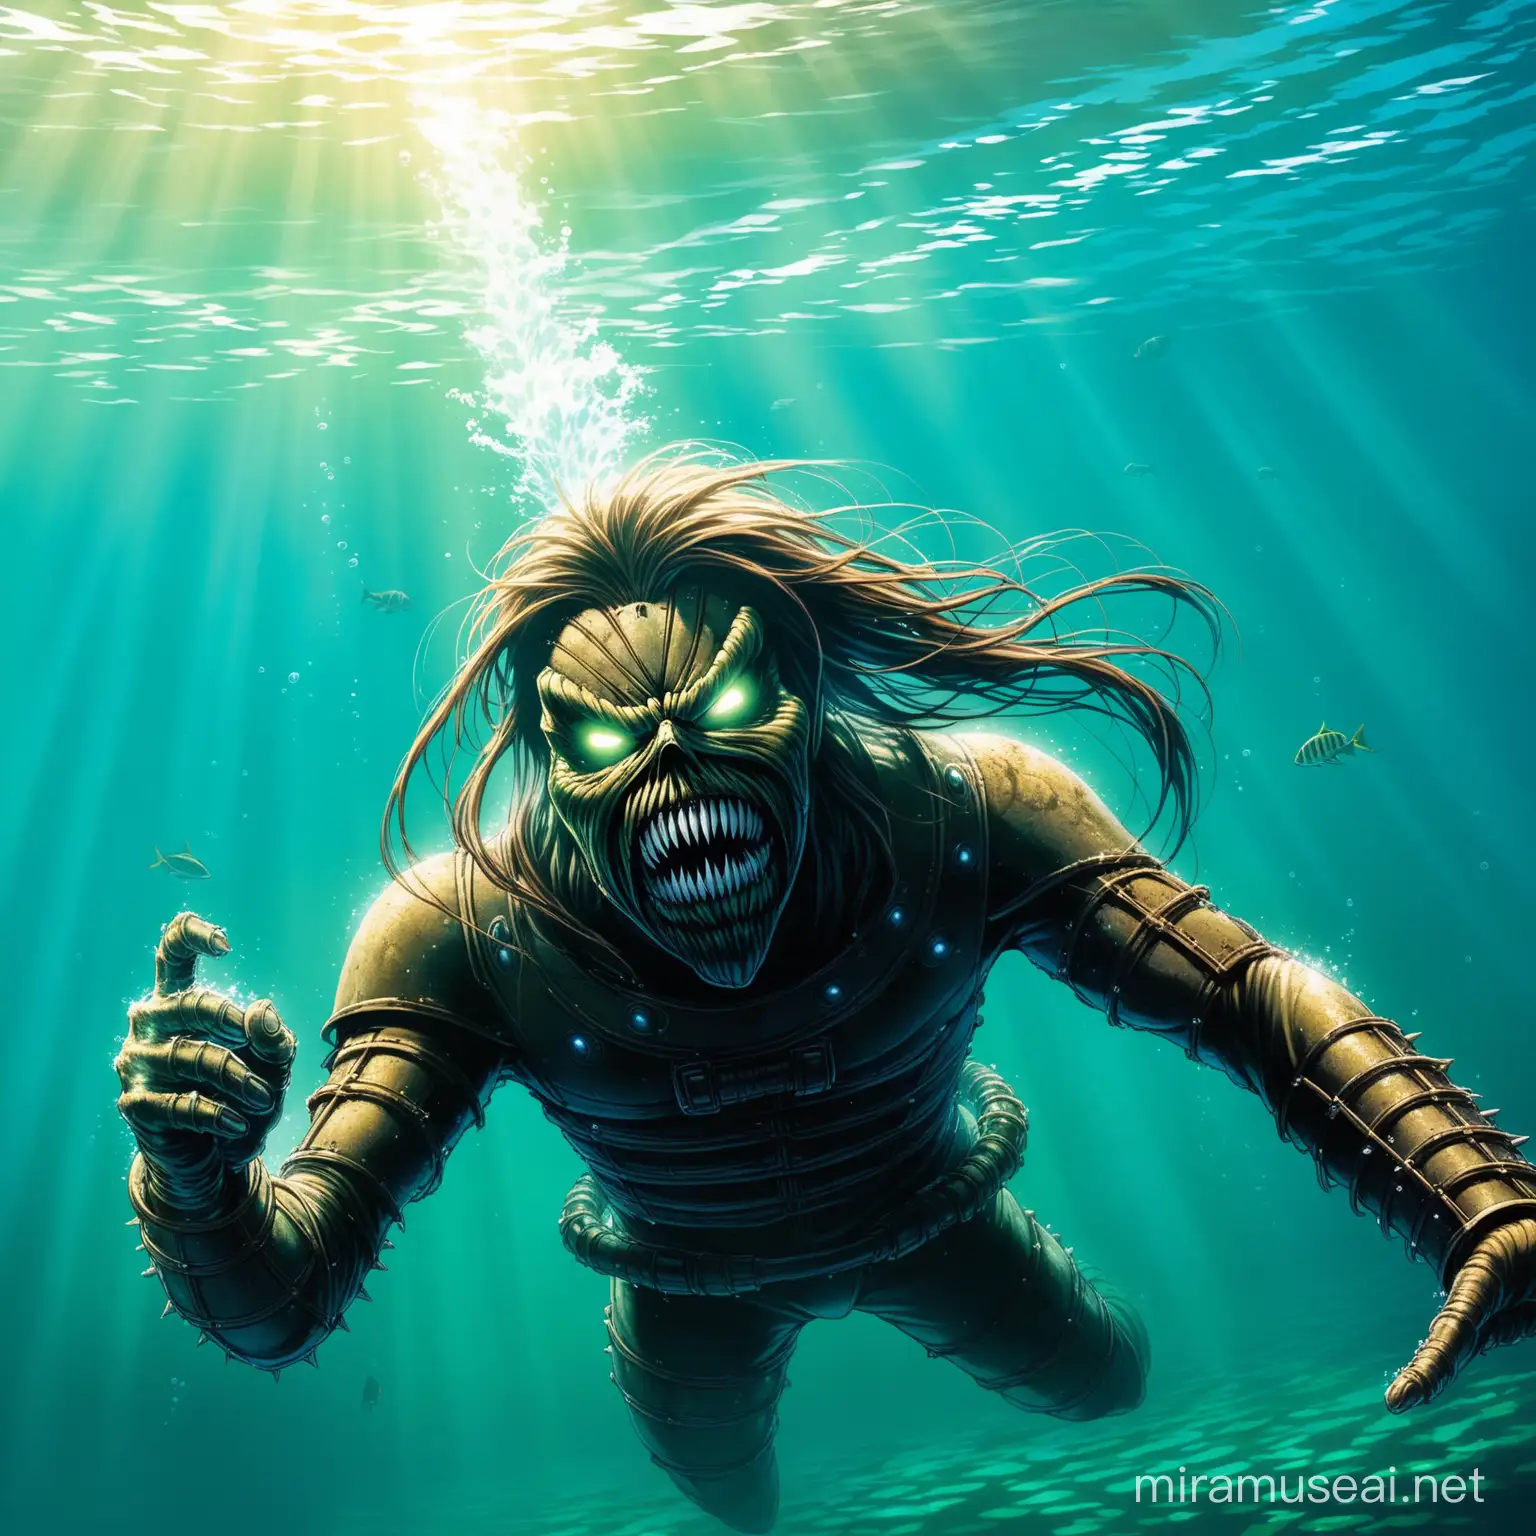 Eddie from Iron Maiden Explores the Mysteries of Atlantida Underwater